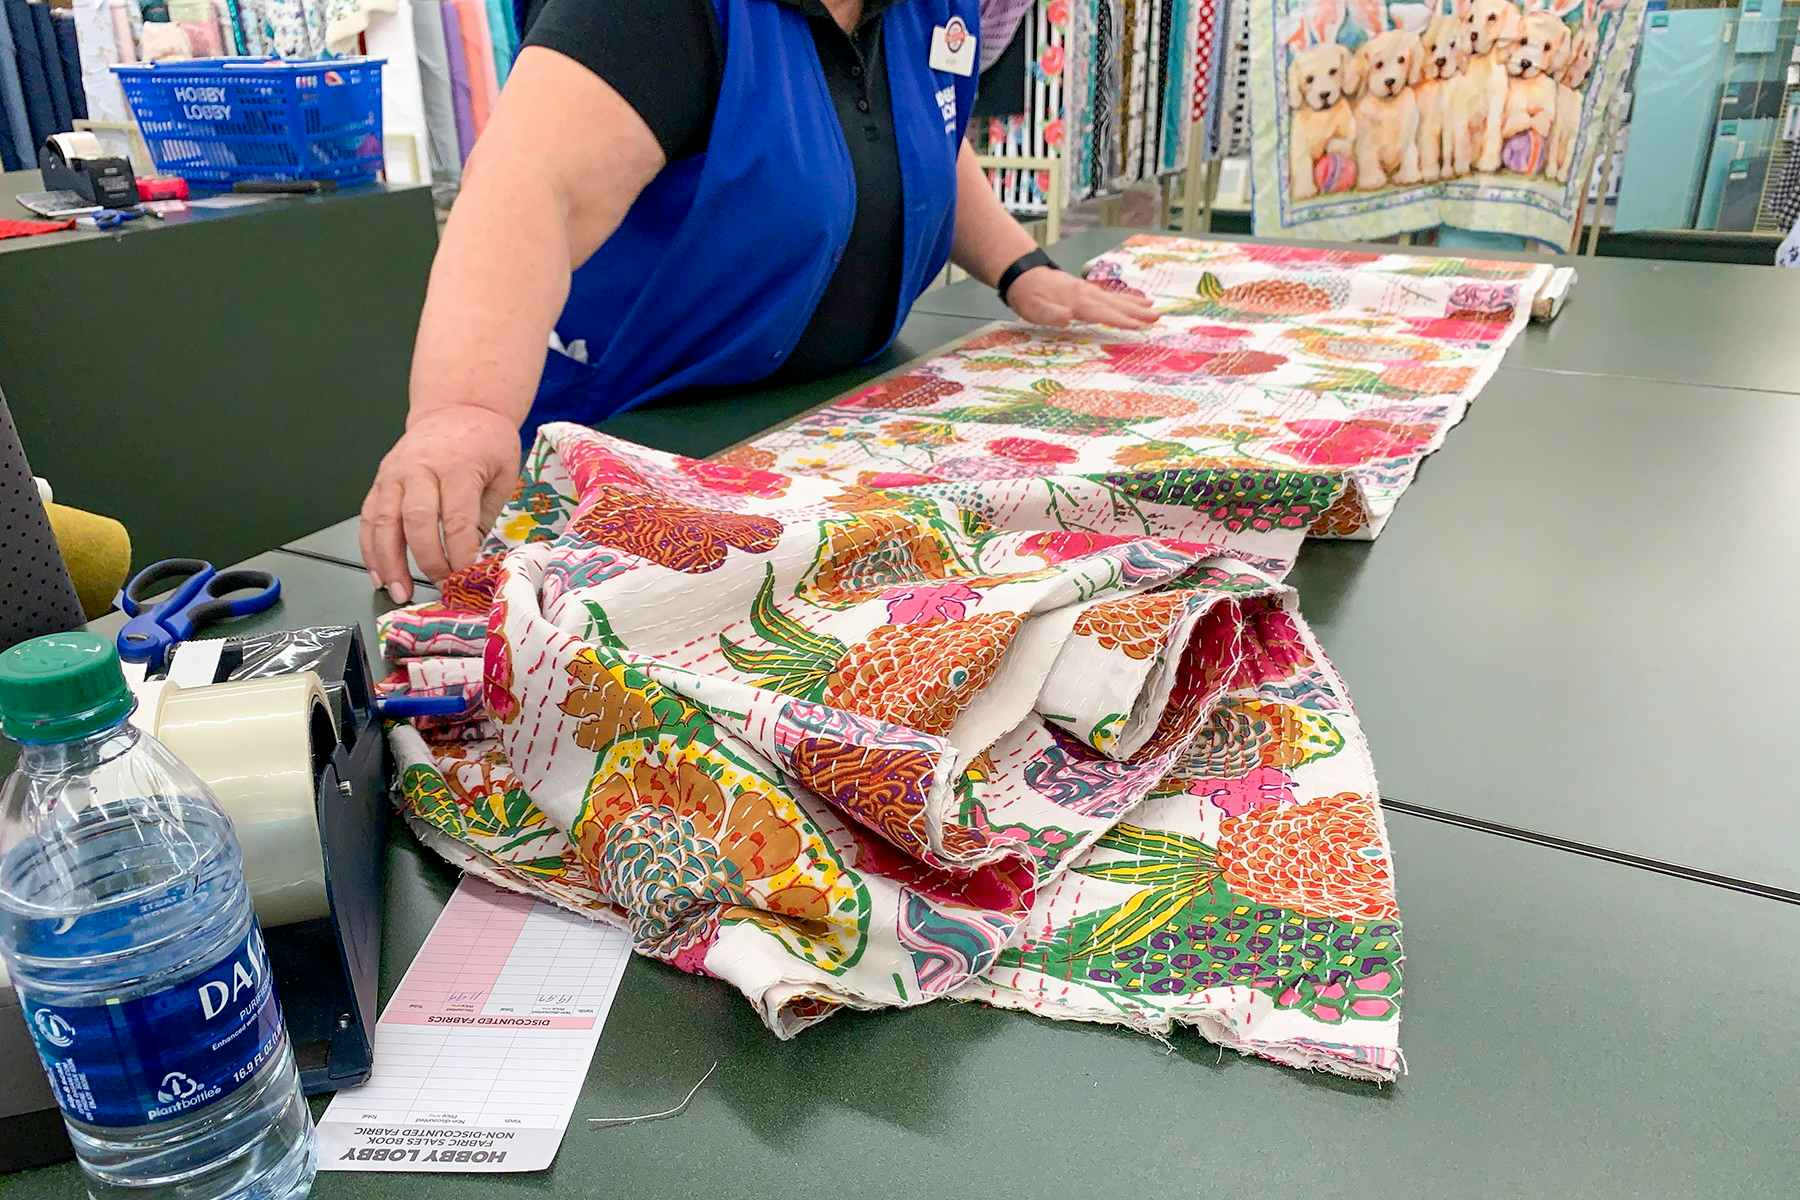 A Hobby Lobby employee cutting fabric.